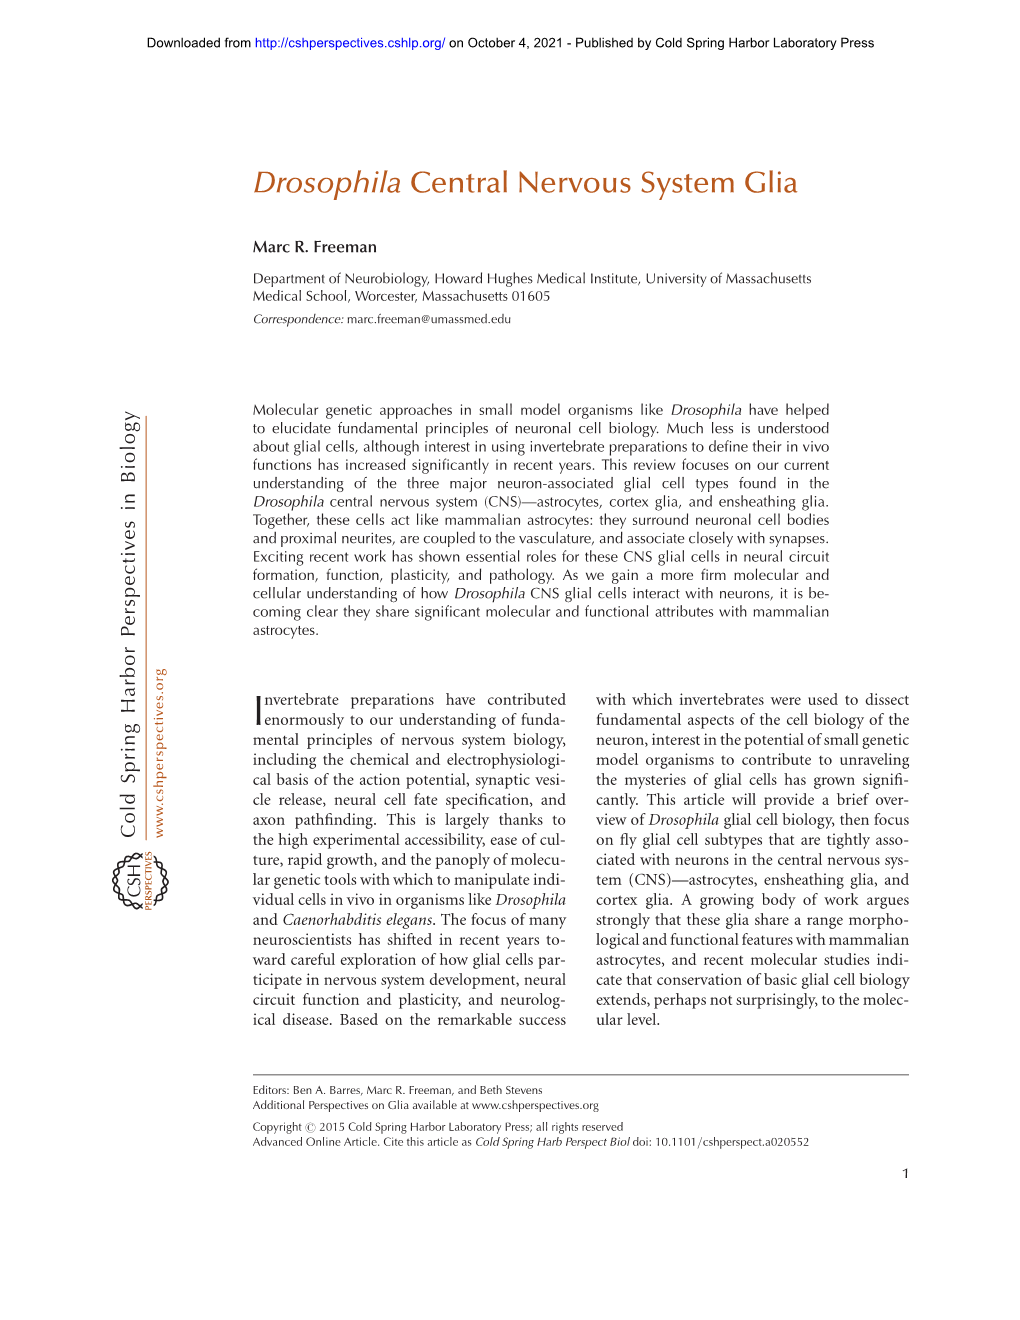 Drosophila Central Nervous System Glia